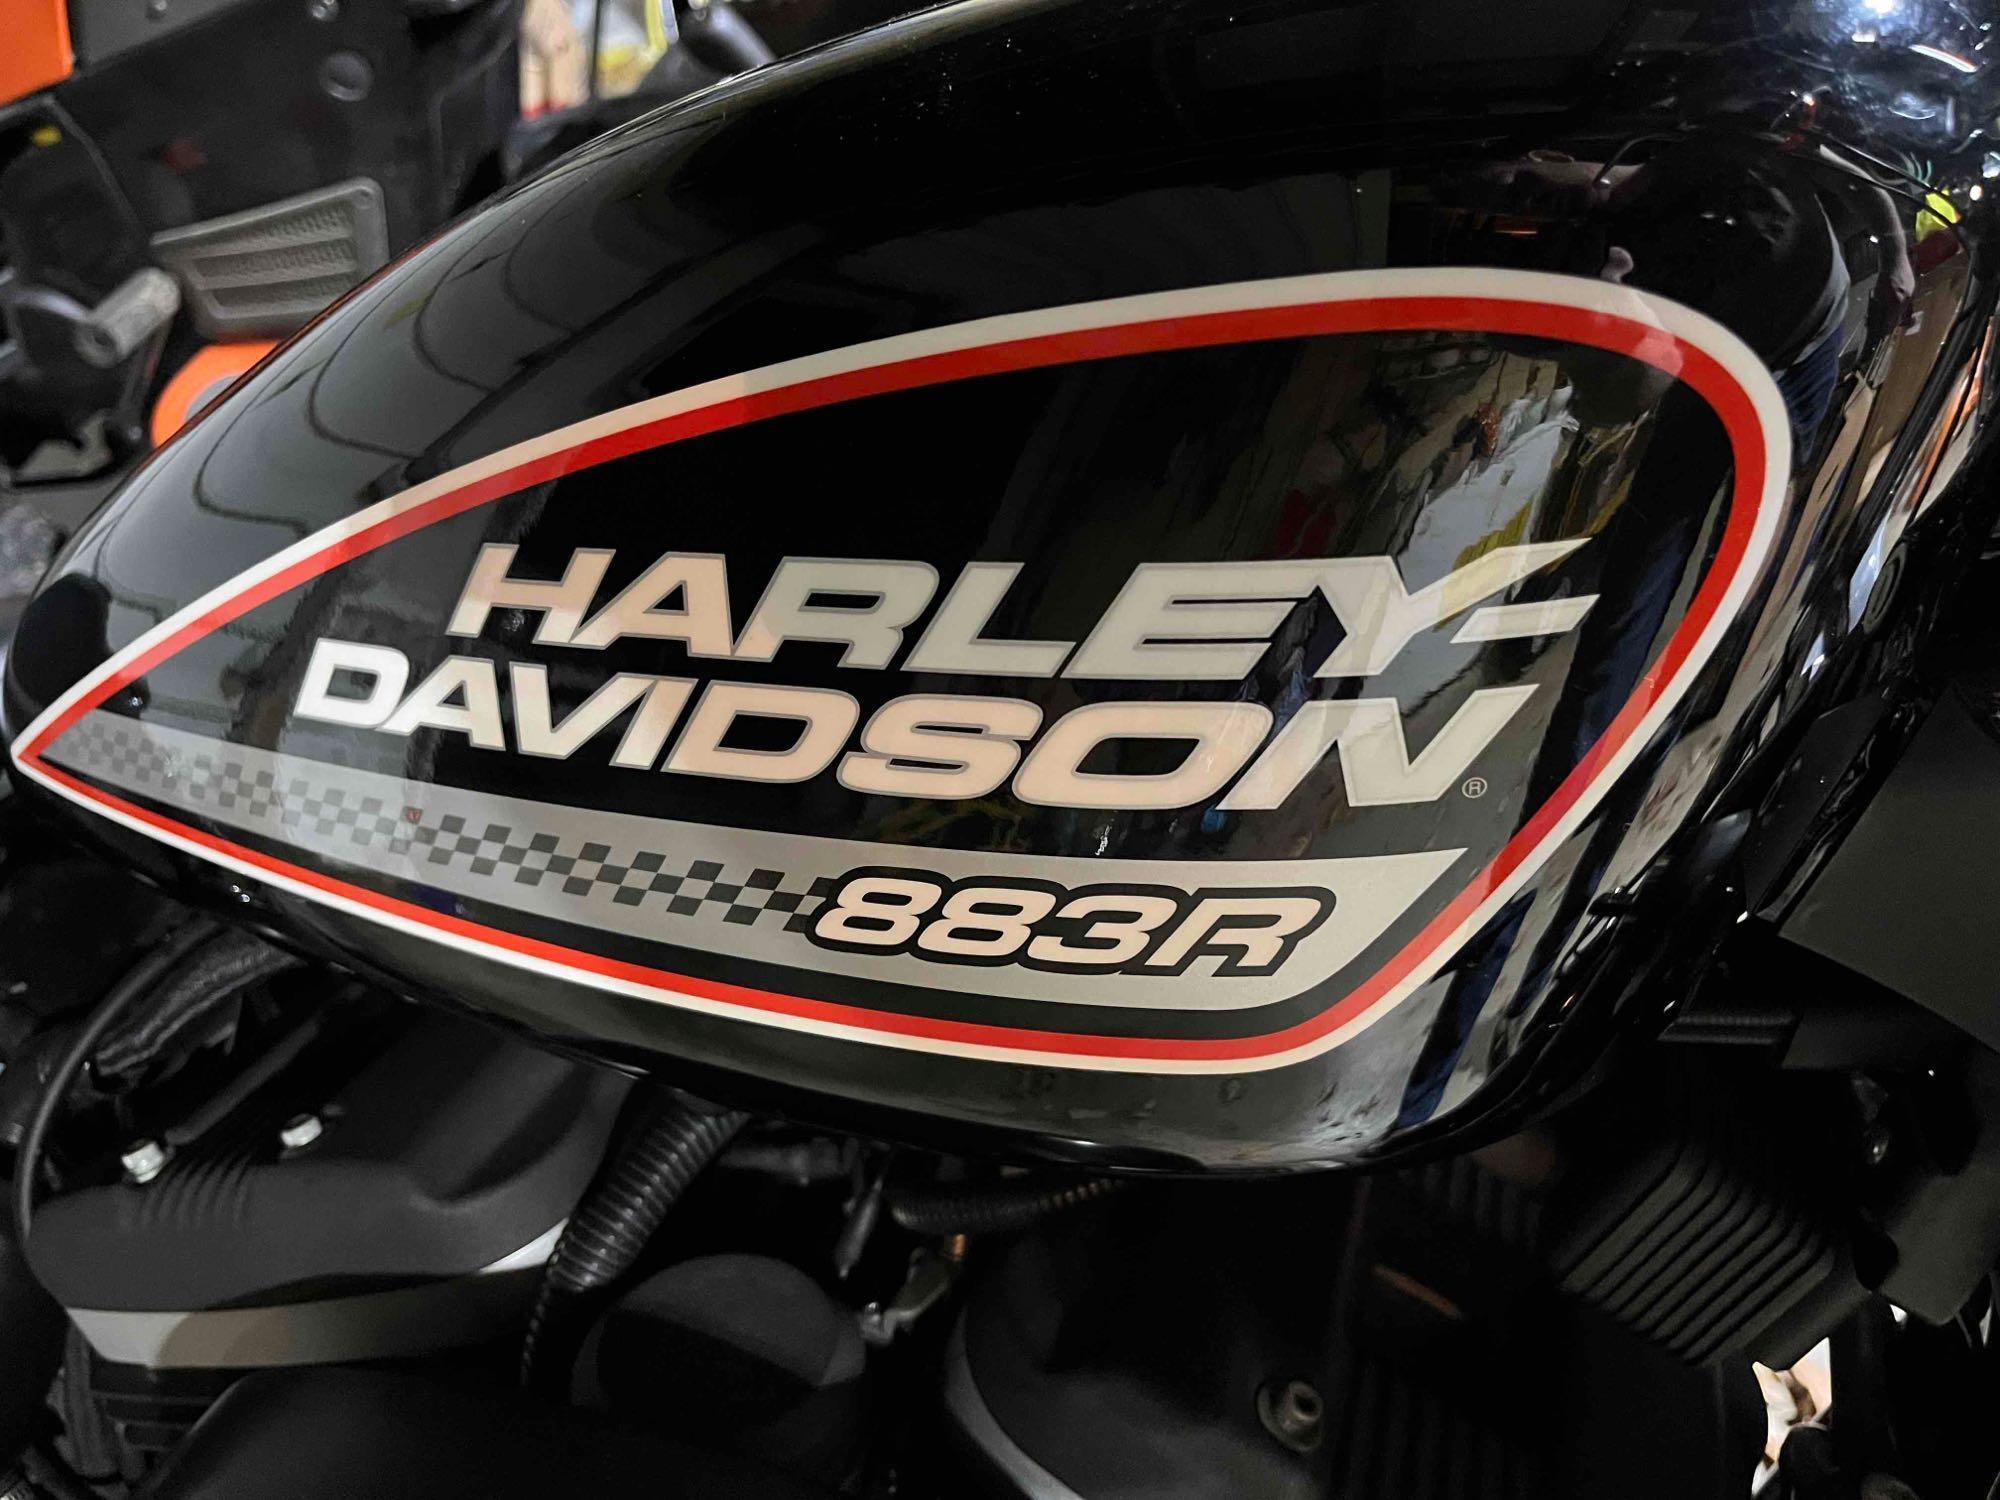 2005 Harley Davidson XL 883R Sportster